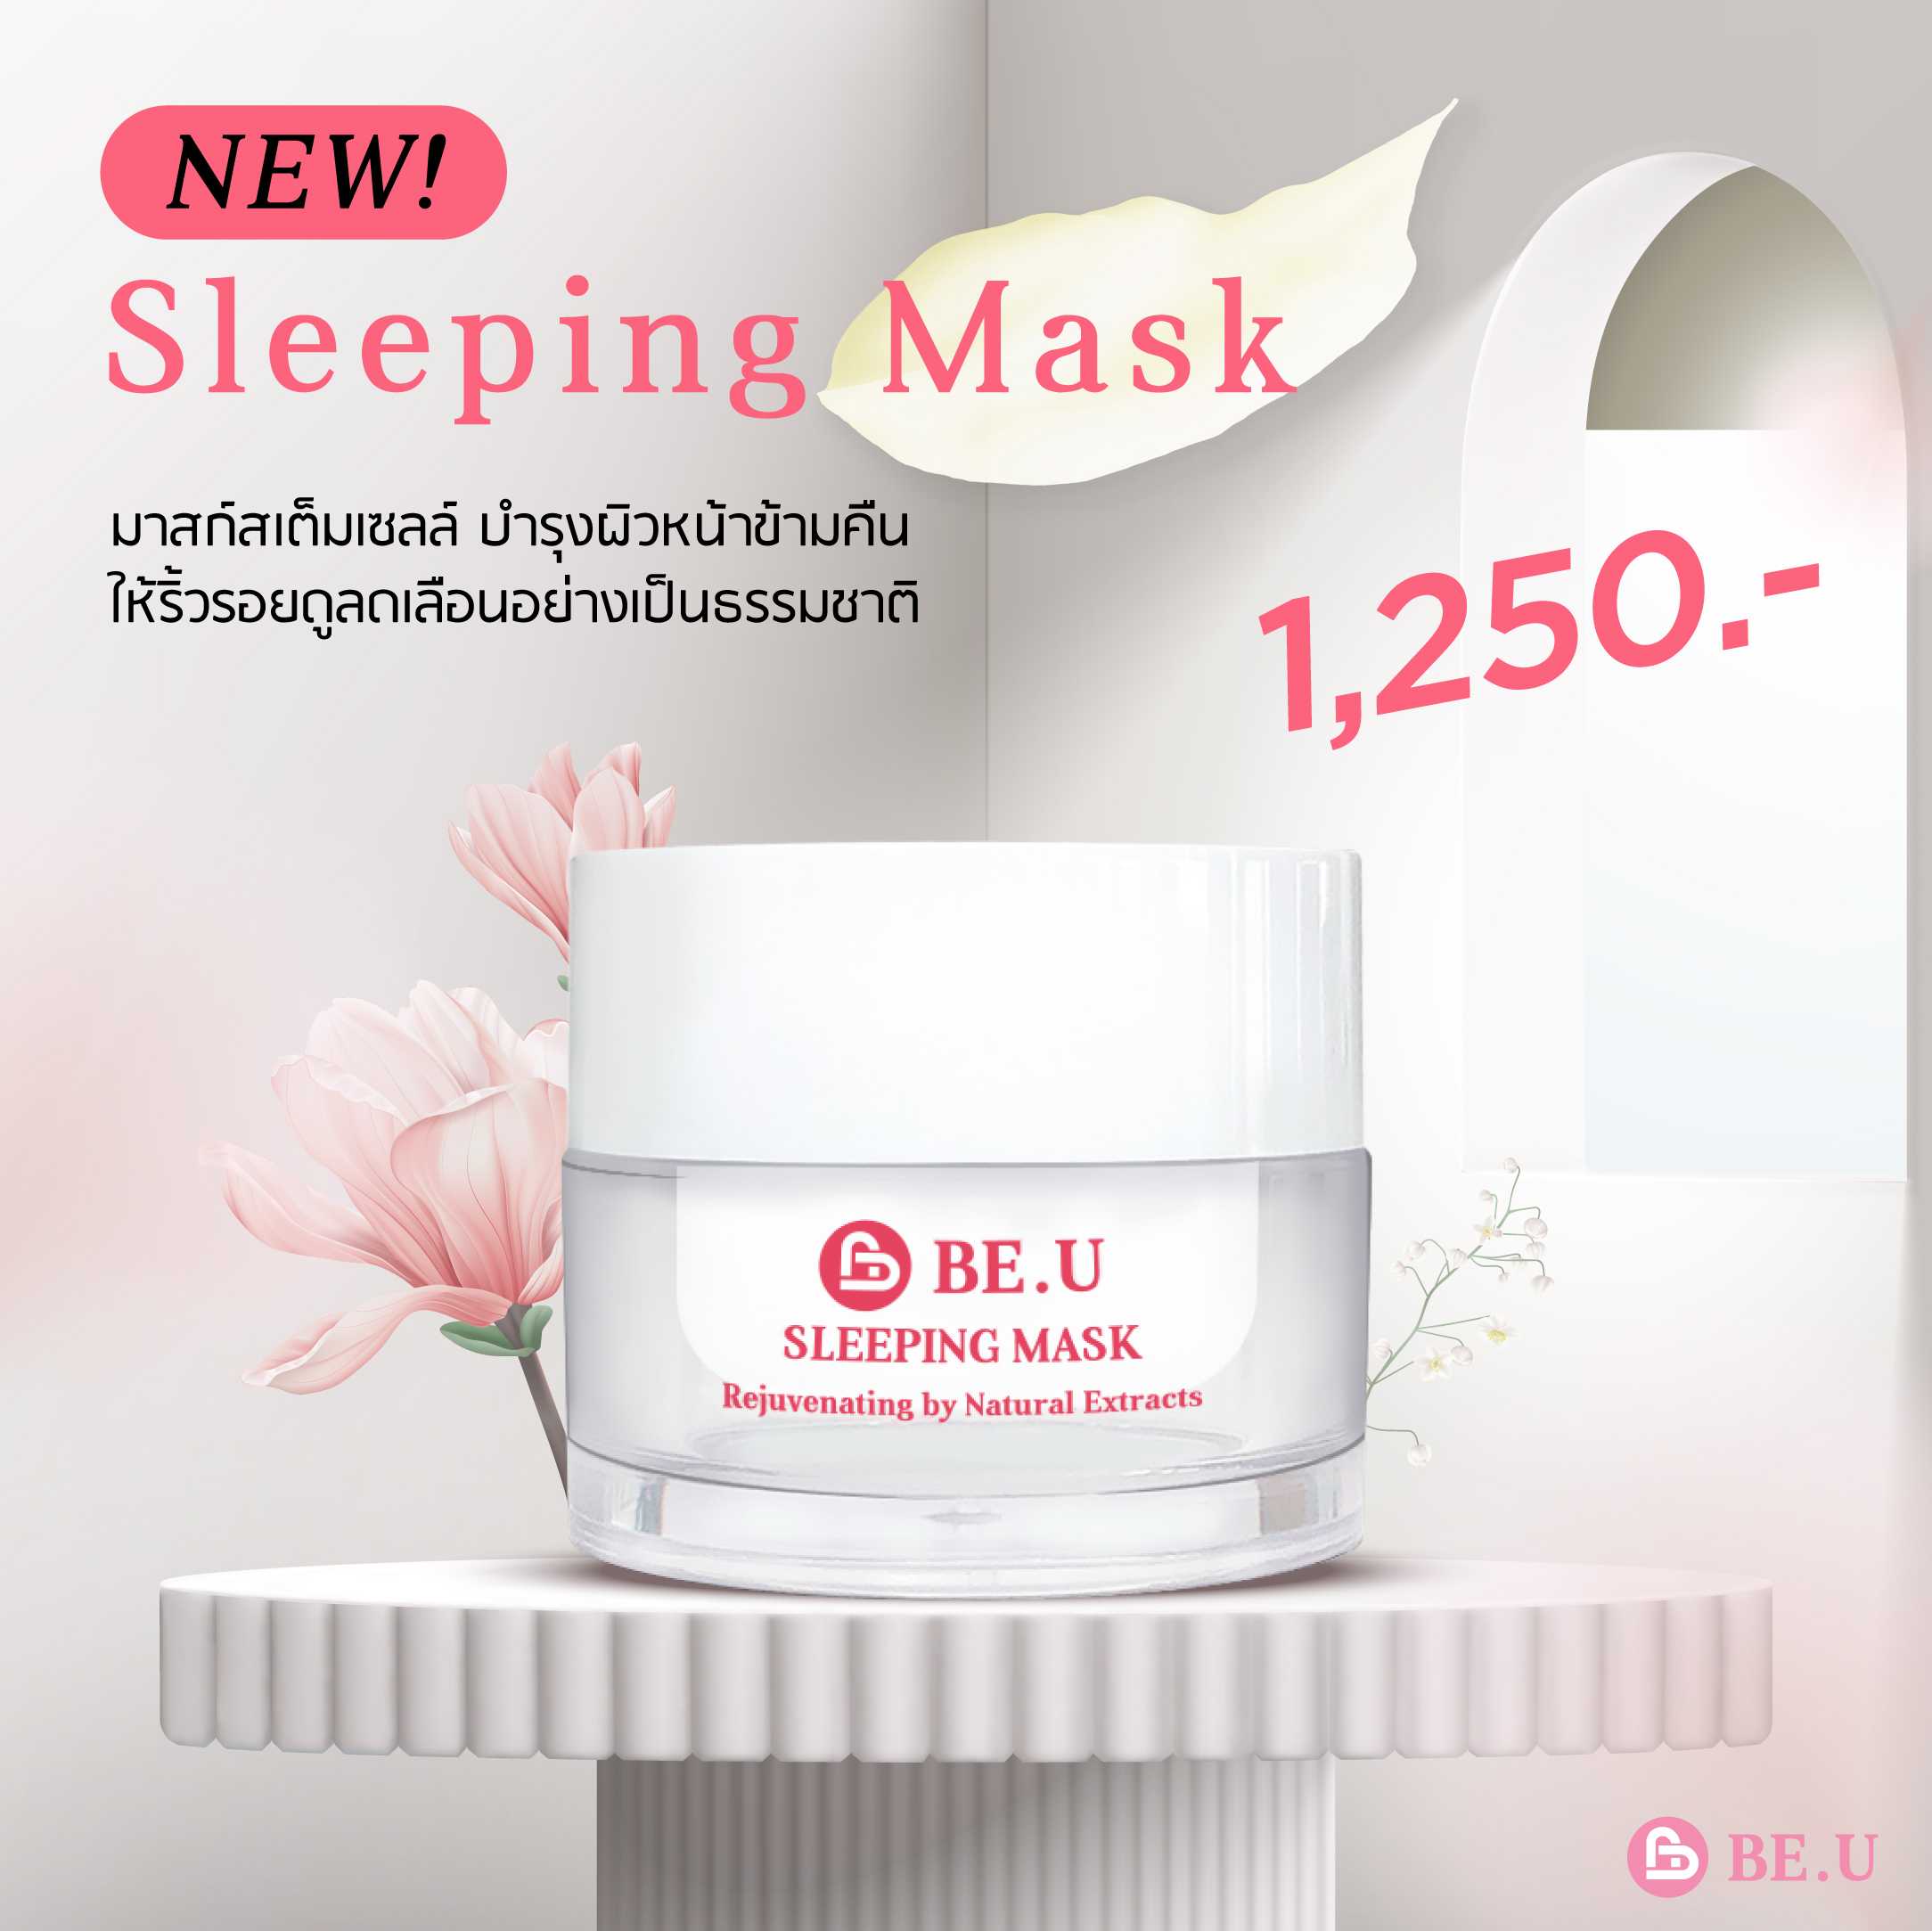 [NEW!] BE.U Sleeping Mask มาสก์สเต็มเซลล์ ลดเลือนริ้วรอย ขนาด 50 g.